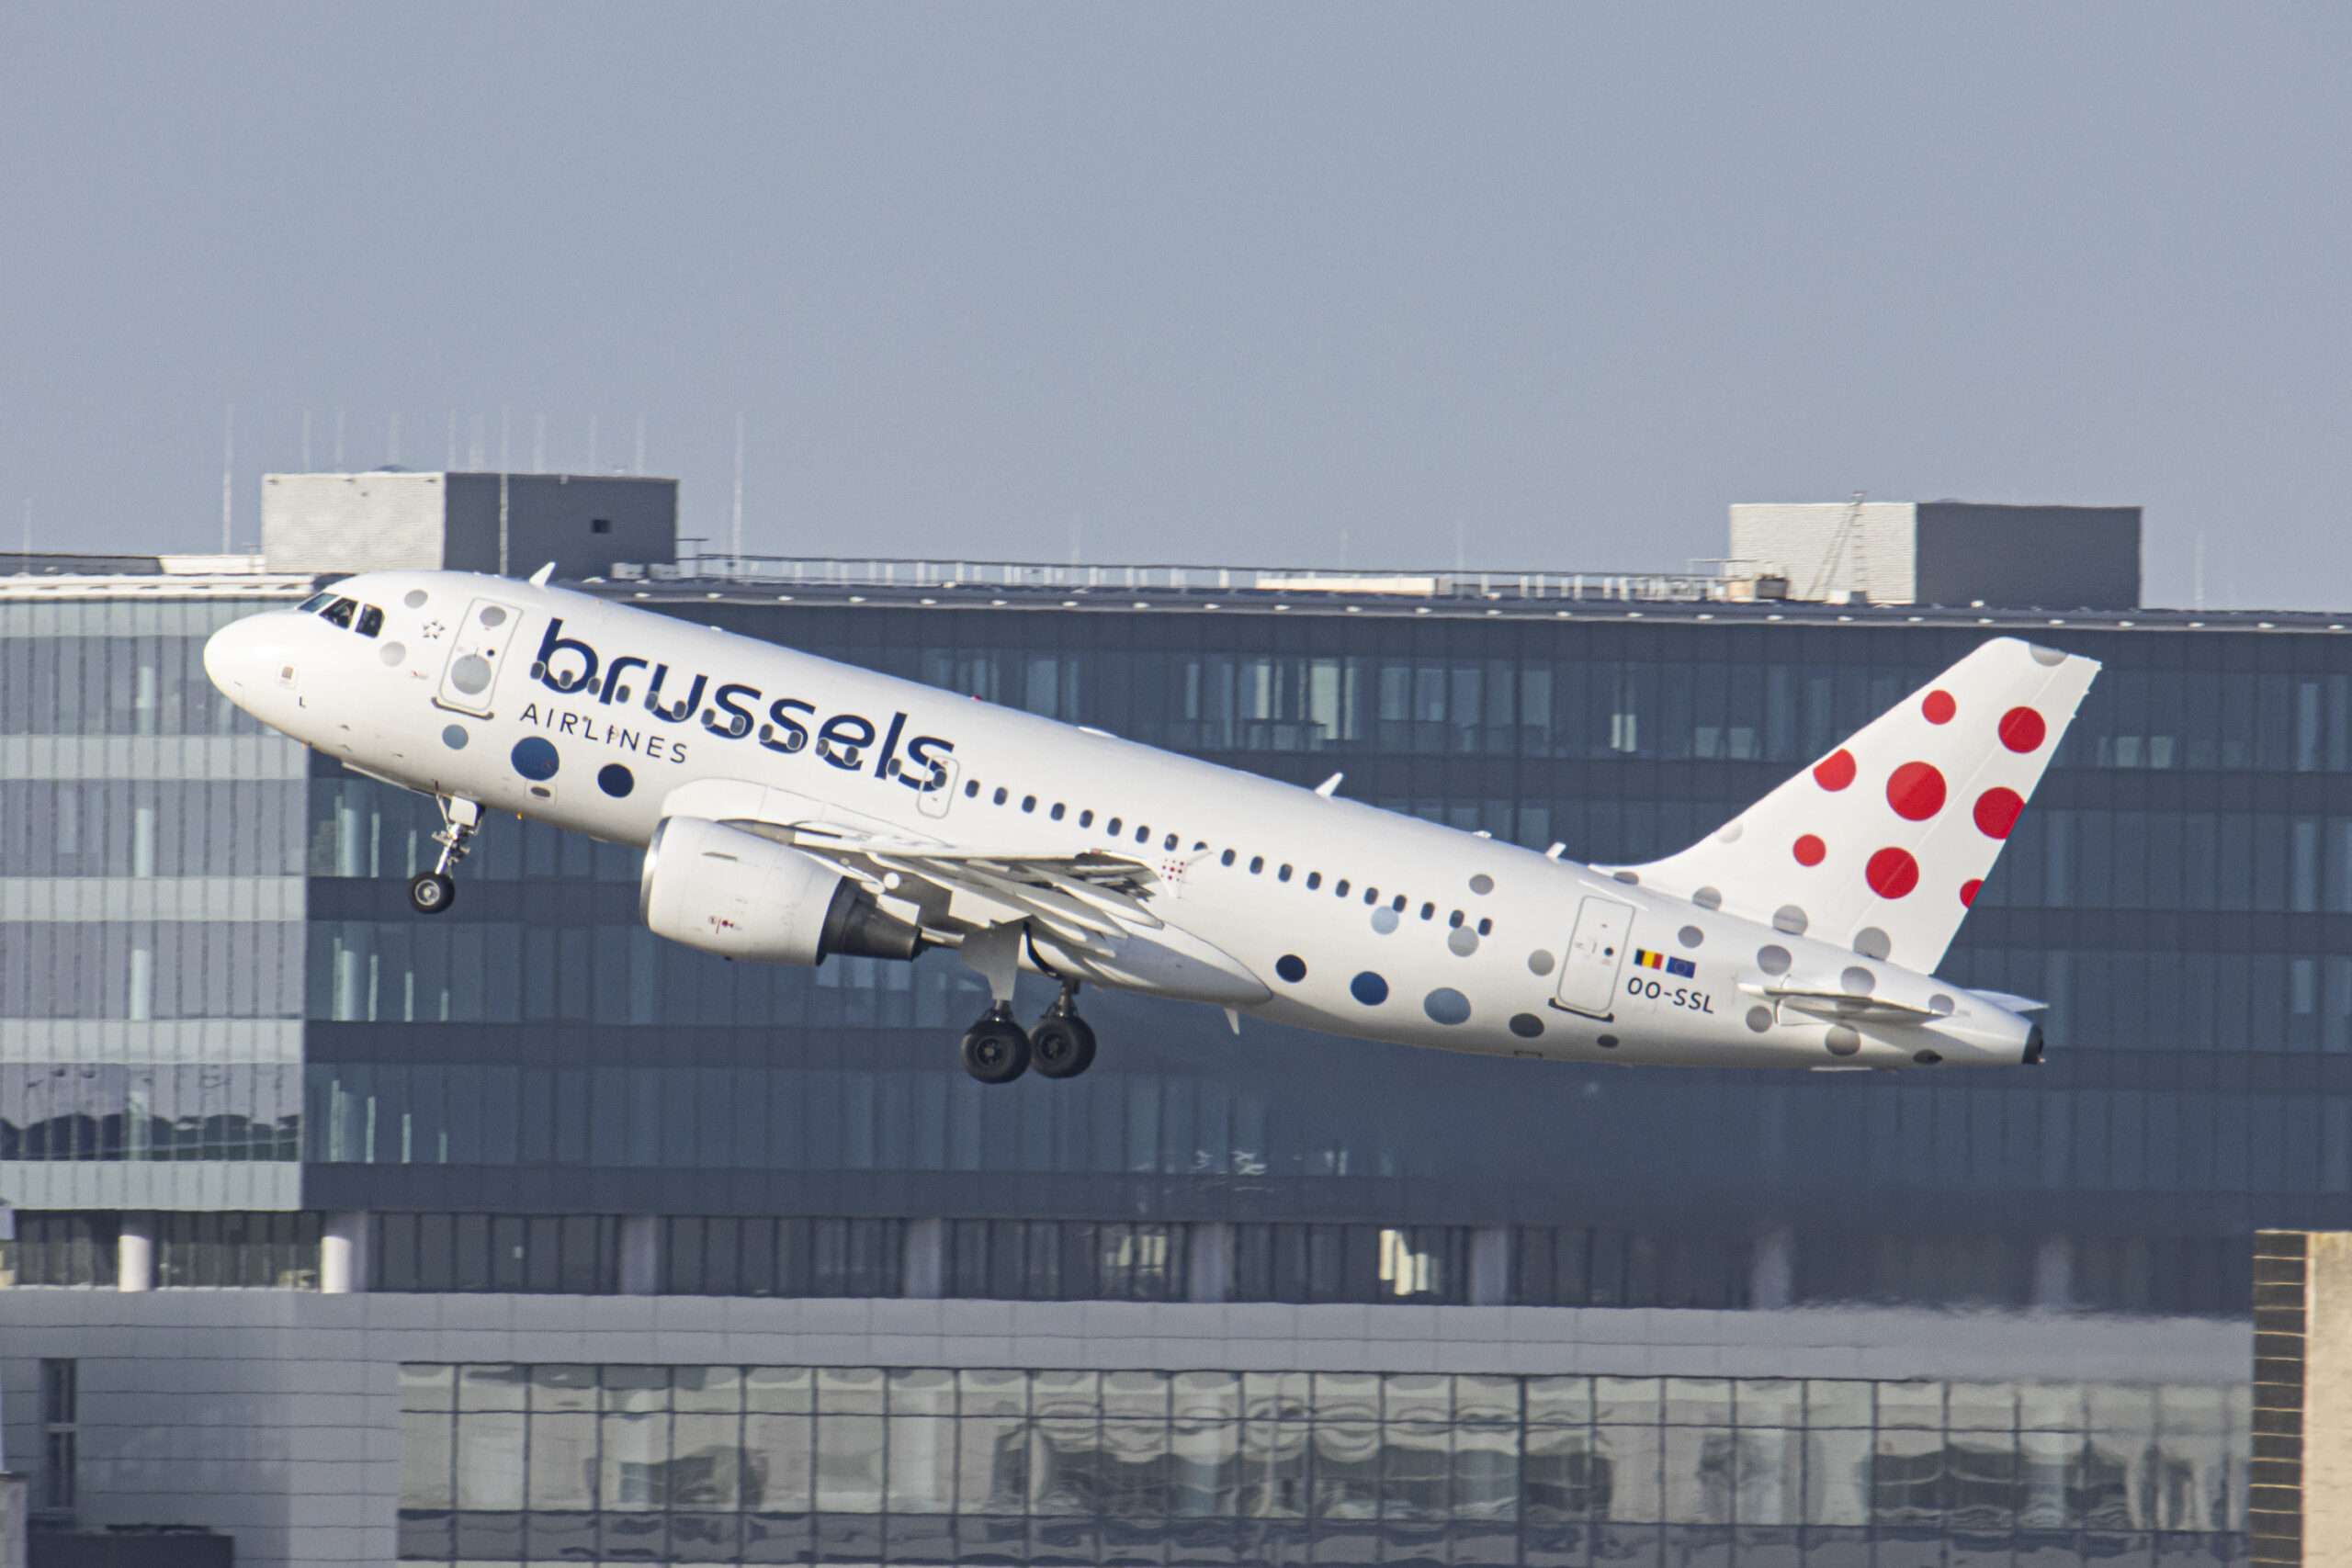 Computer Issue: Brussels Flight From Ljubljana Rejects Takeoff